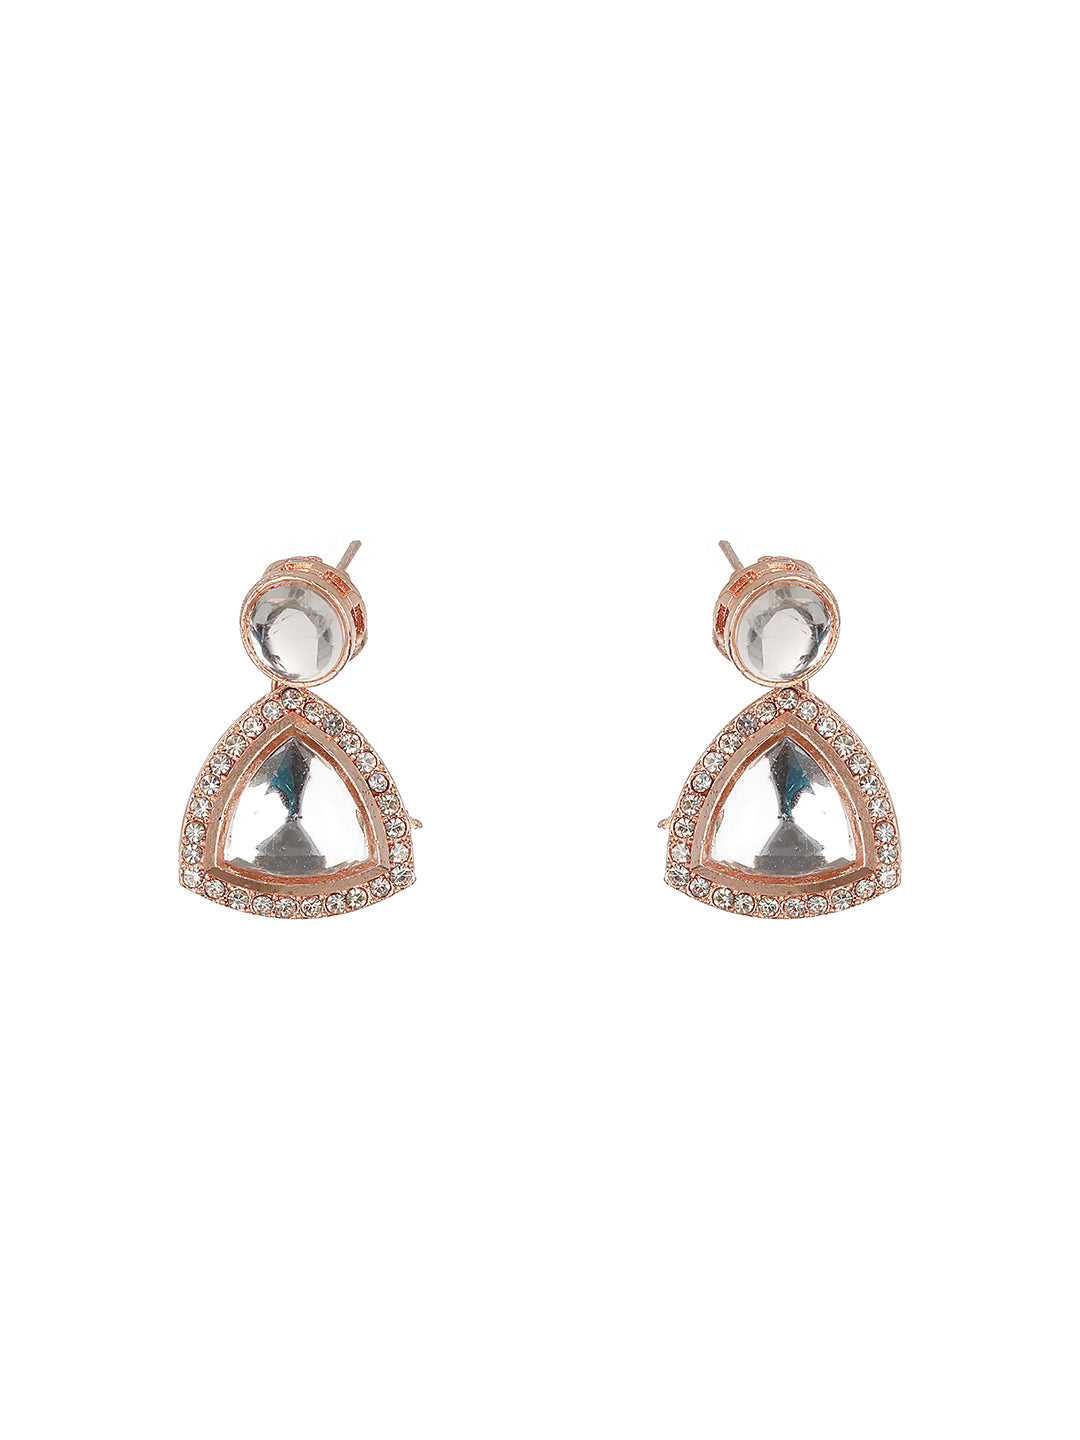 Rosegold-Plated CZ-Studded Geometric Drop Earrings